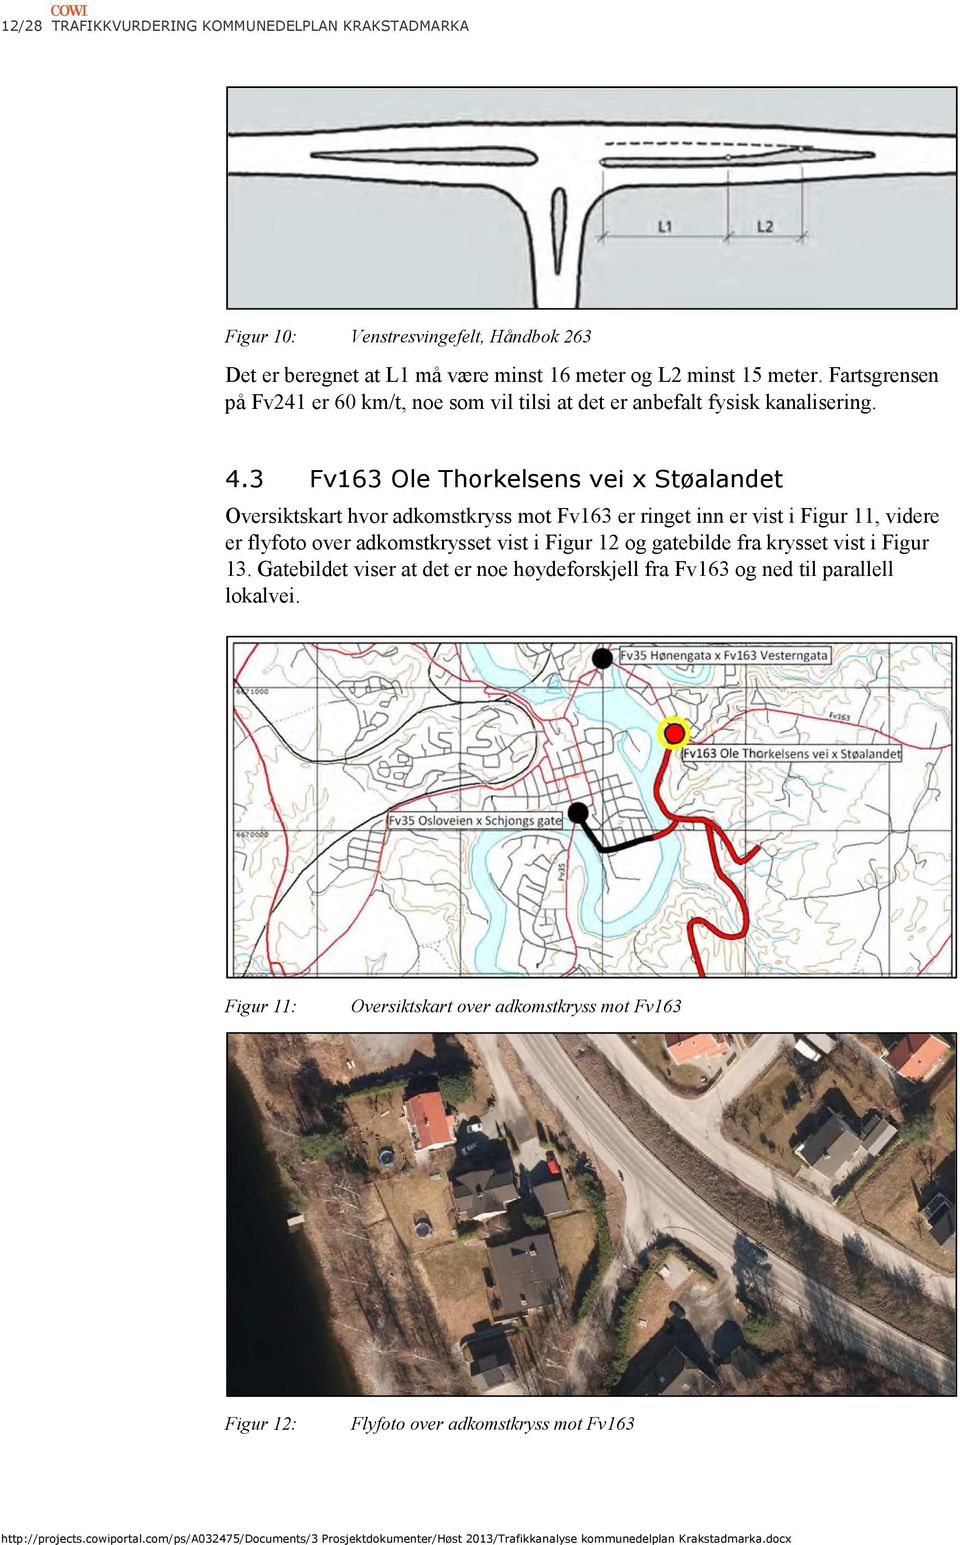 3 Fv163 Ole Thorkelsens vei x Støalandet Oversiktskart hvor adkomstkryss mot Fv163 er ringet inn er vist i Figur 11, videre er flyfoto over adkomstkrysset vist i